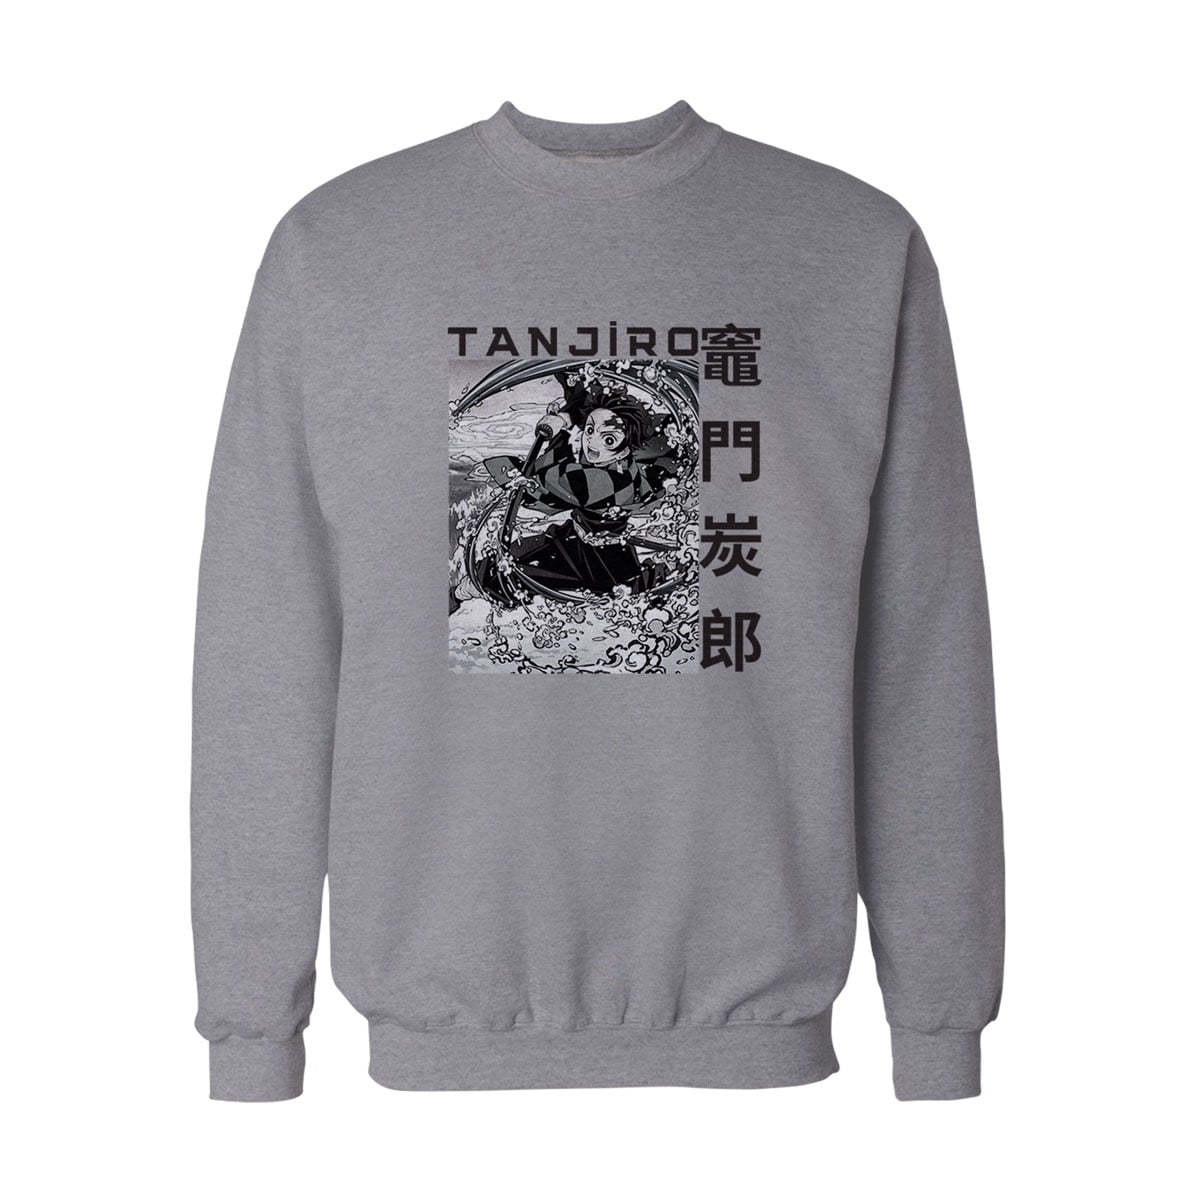 Demon slayer tanjiro sweatshirt g - demon slayer tanjiro unisex sweatshirt - figurex